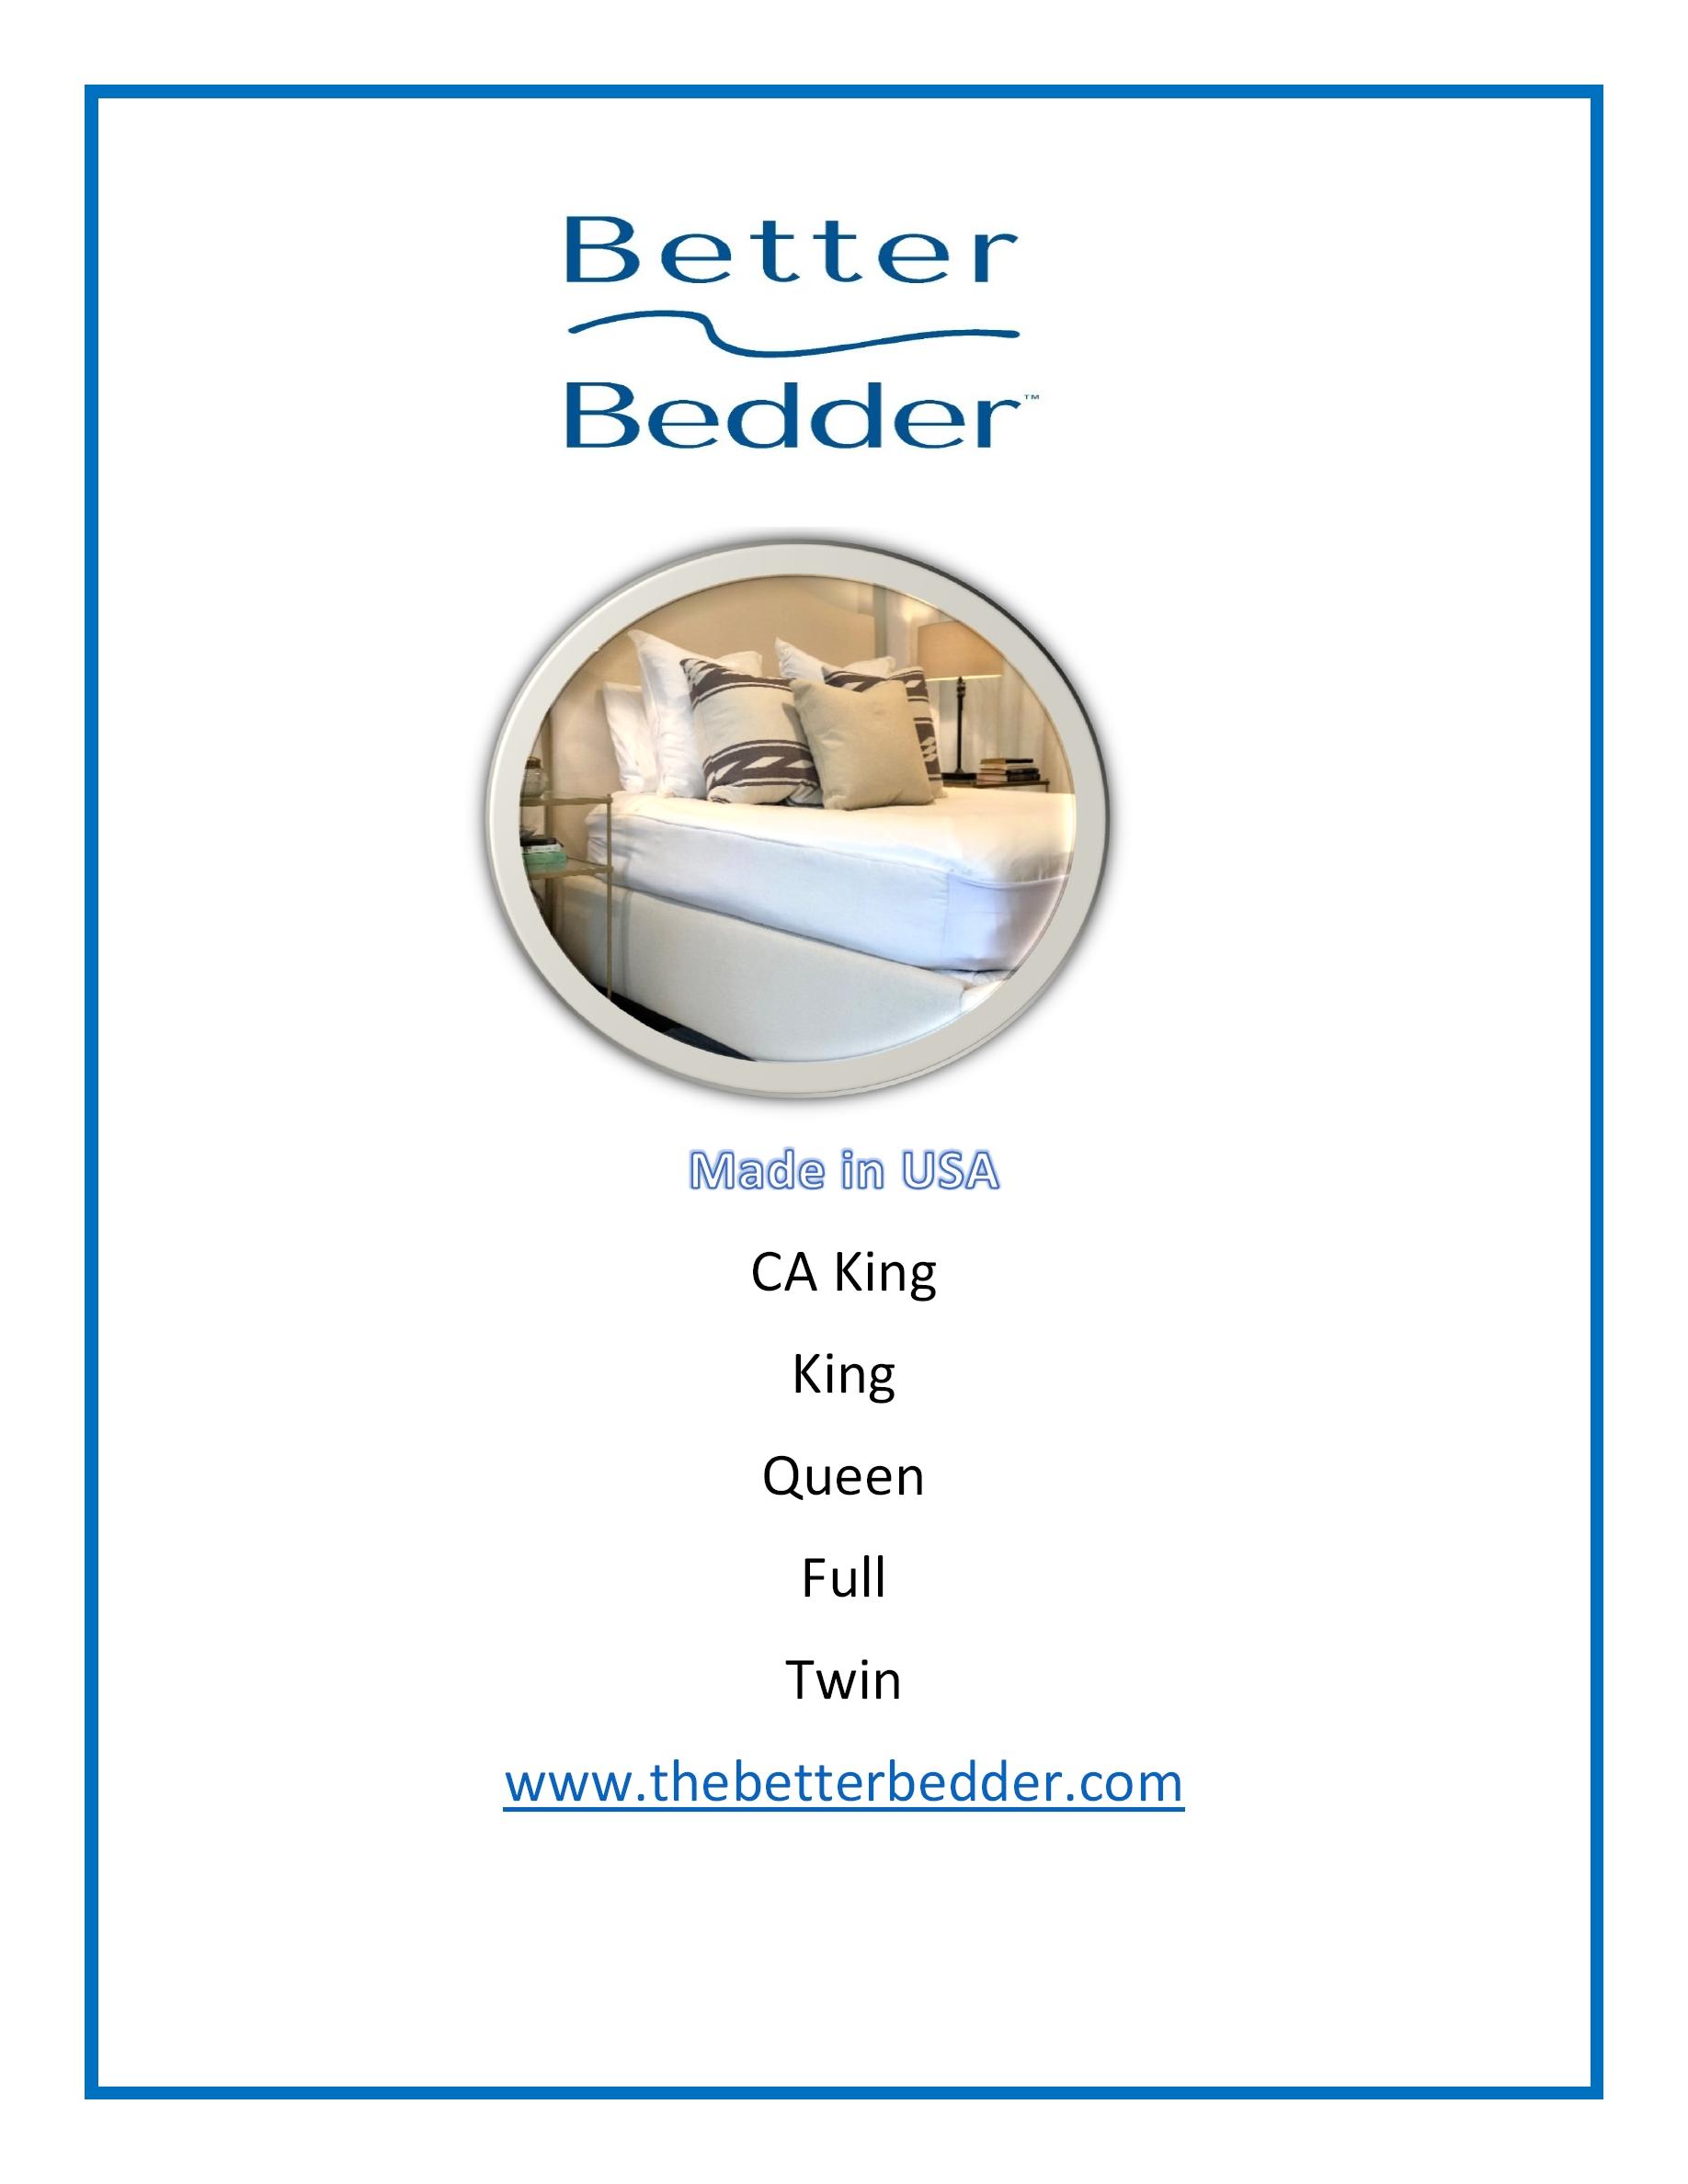 BETTER BEDDER - Cannella, Llc Trademark Registration